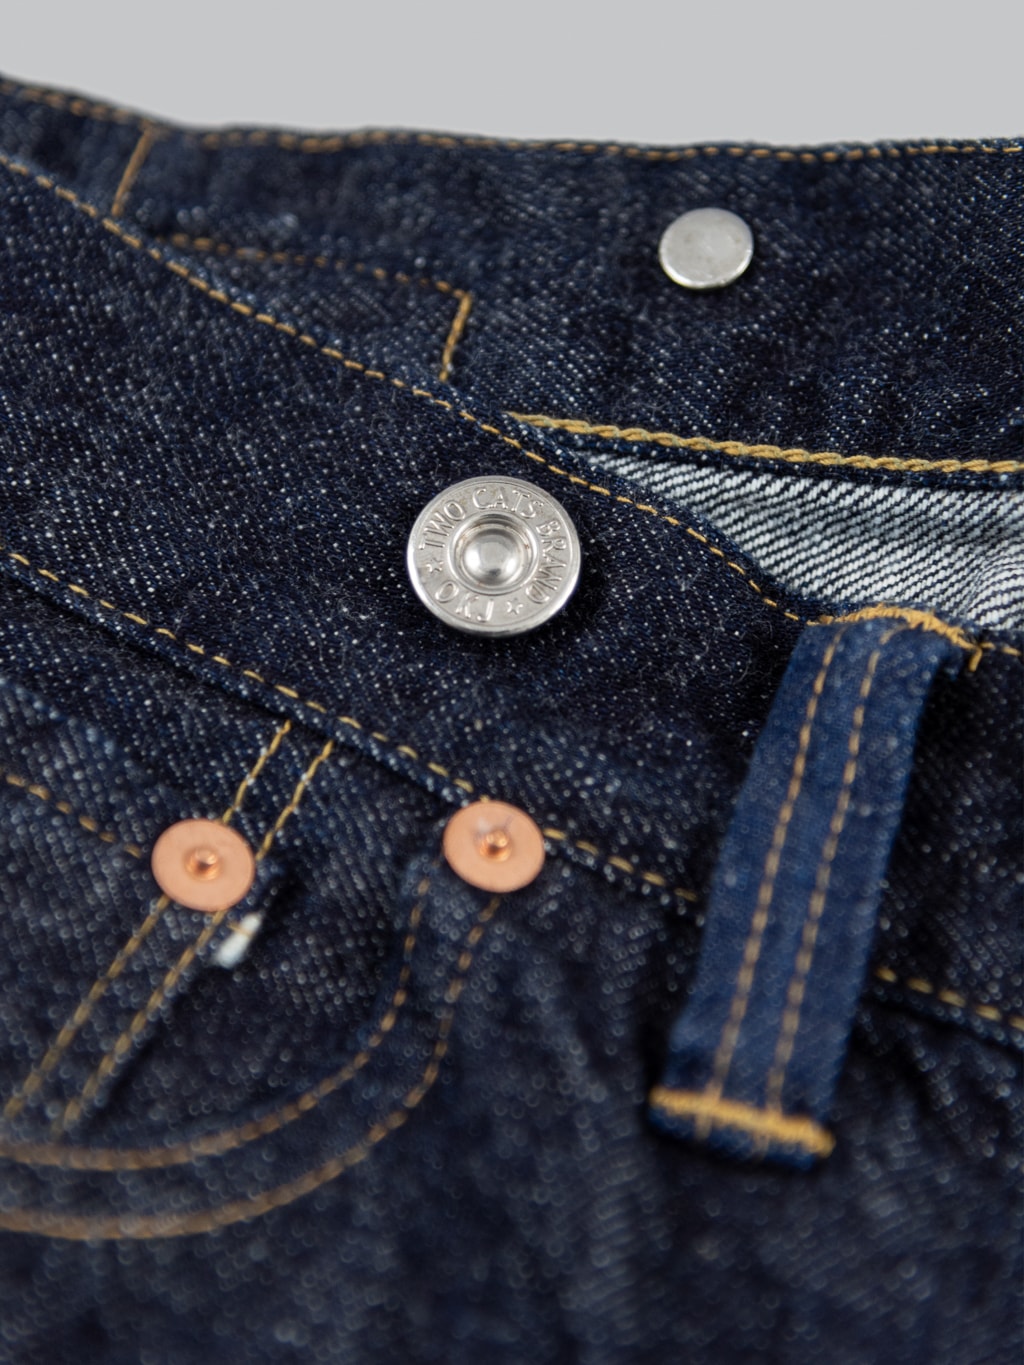 TCB 20s indigo Jeans one wash vintage style cinchbeck button closeup